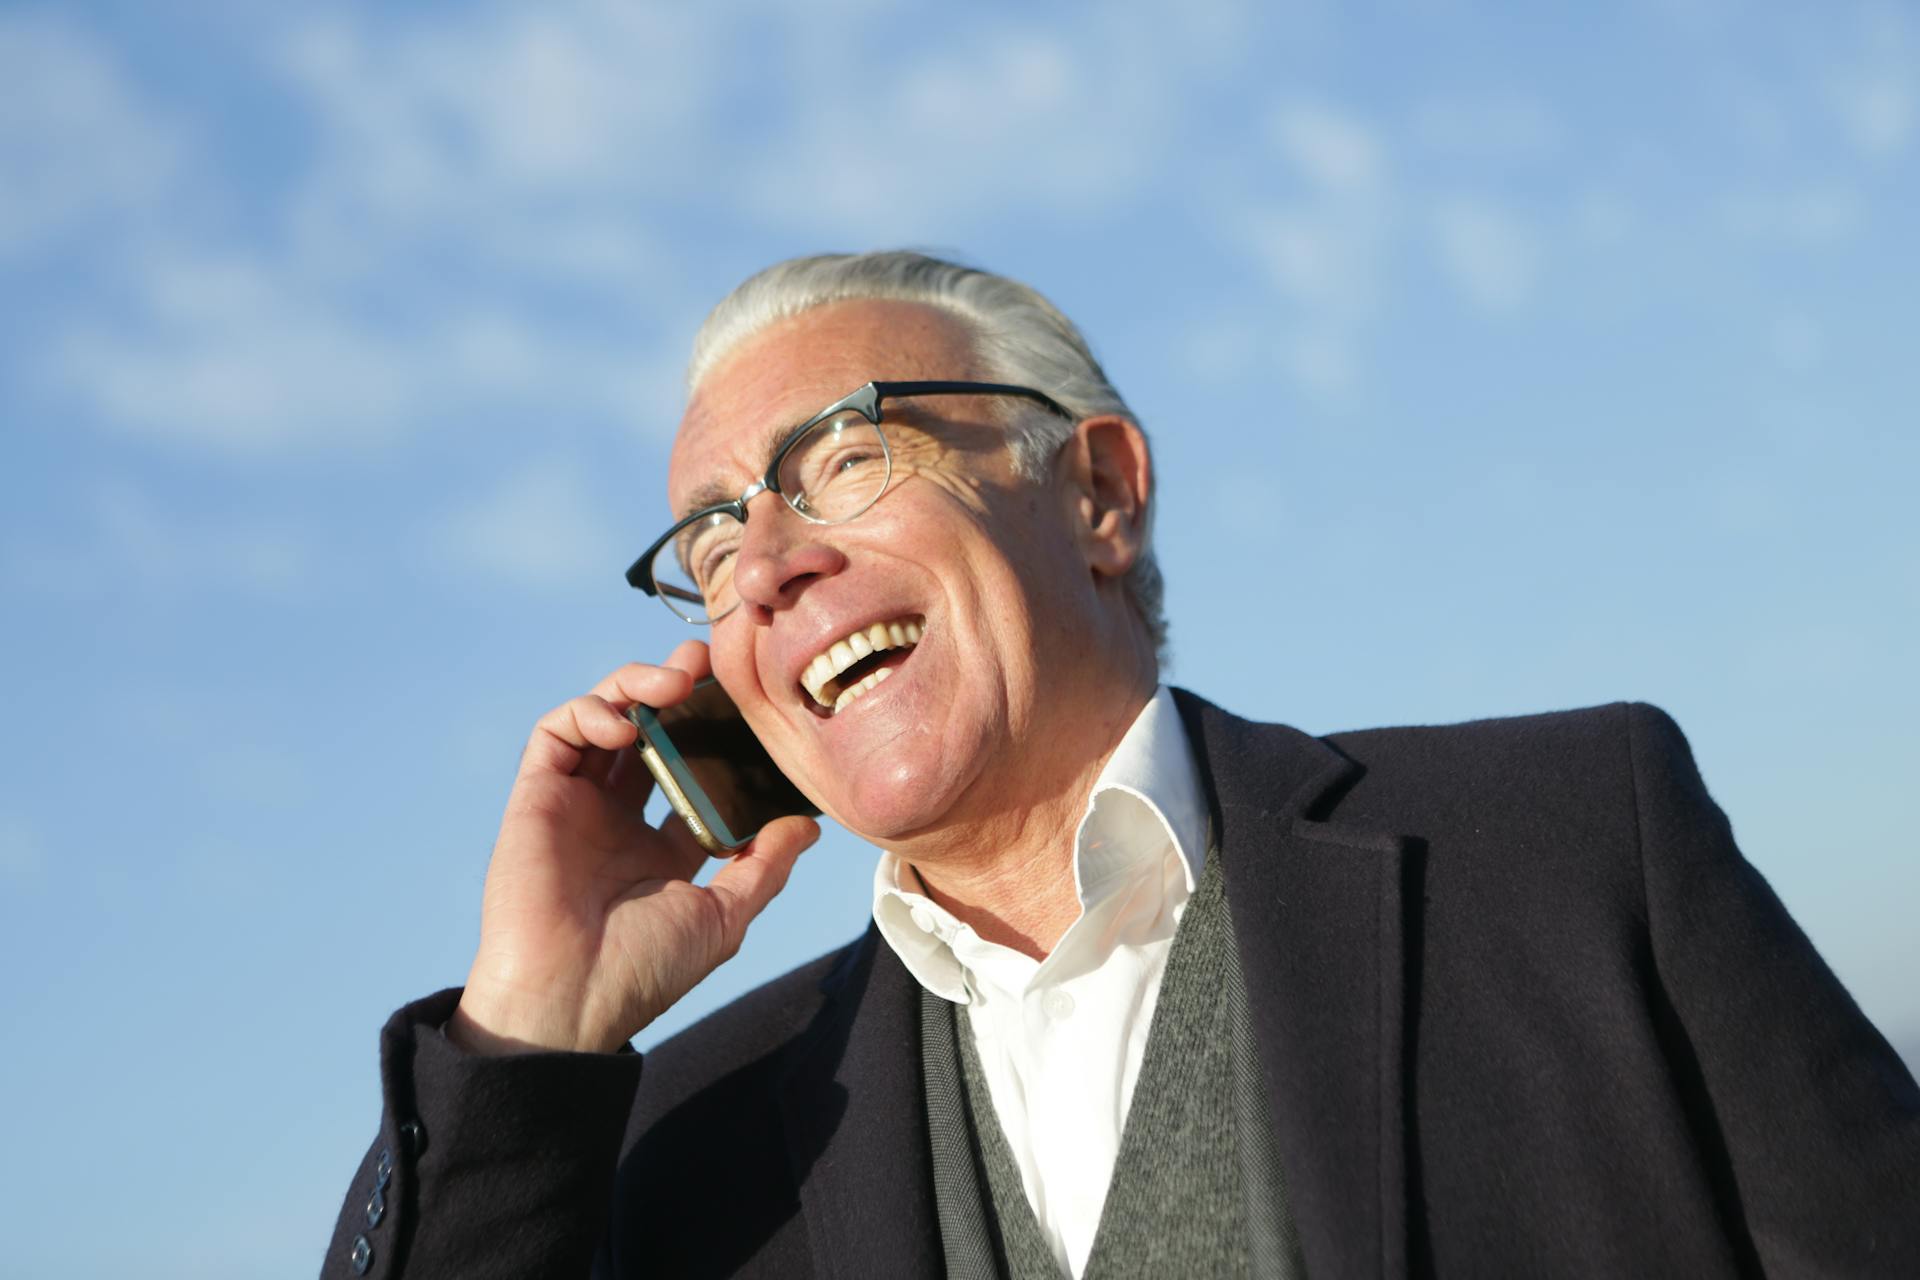 An elderly man on the phone | Source: Pexels